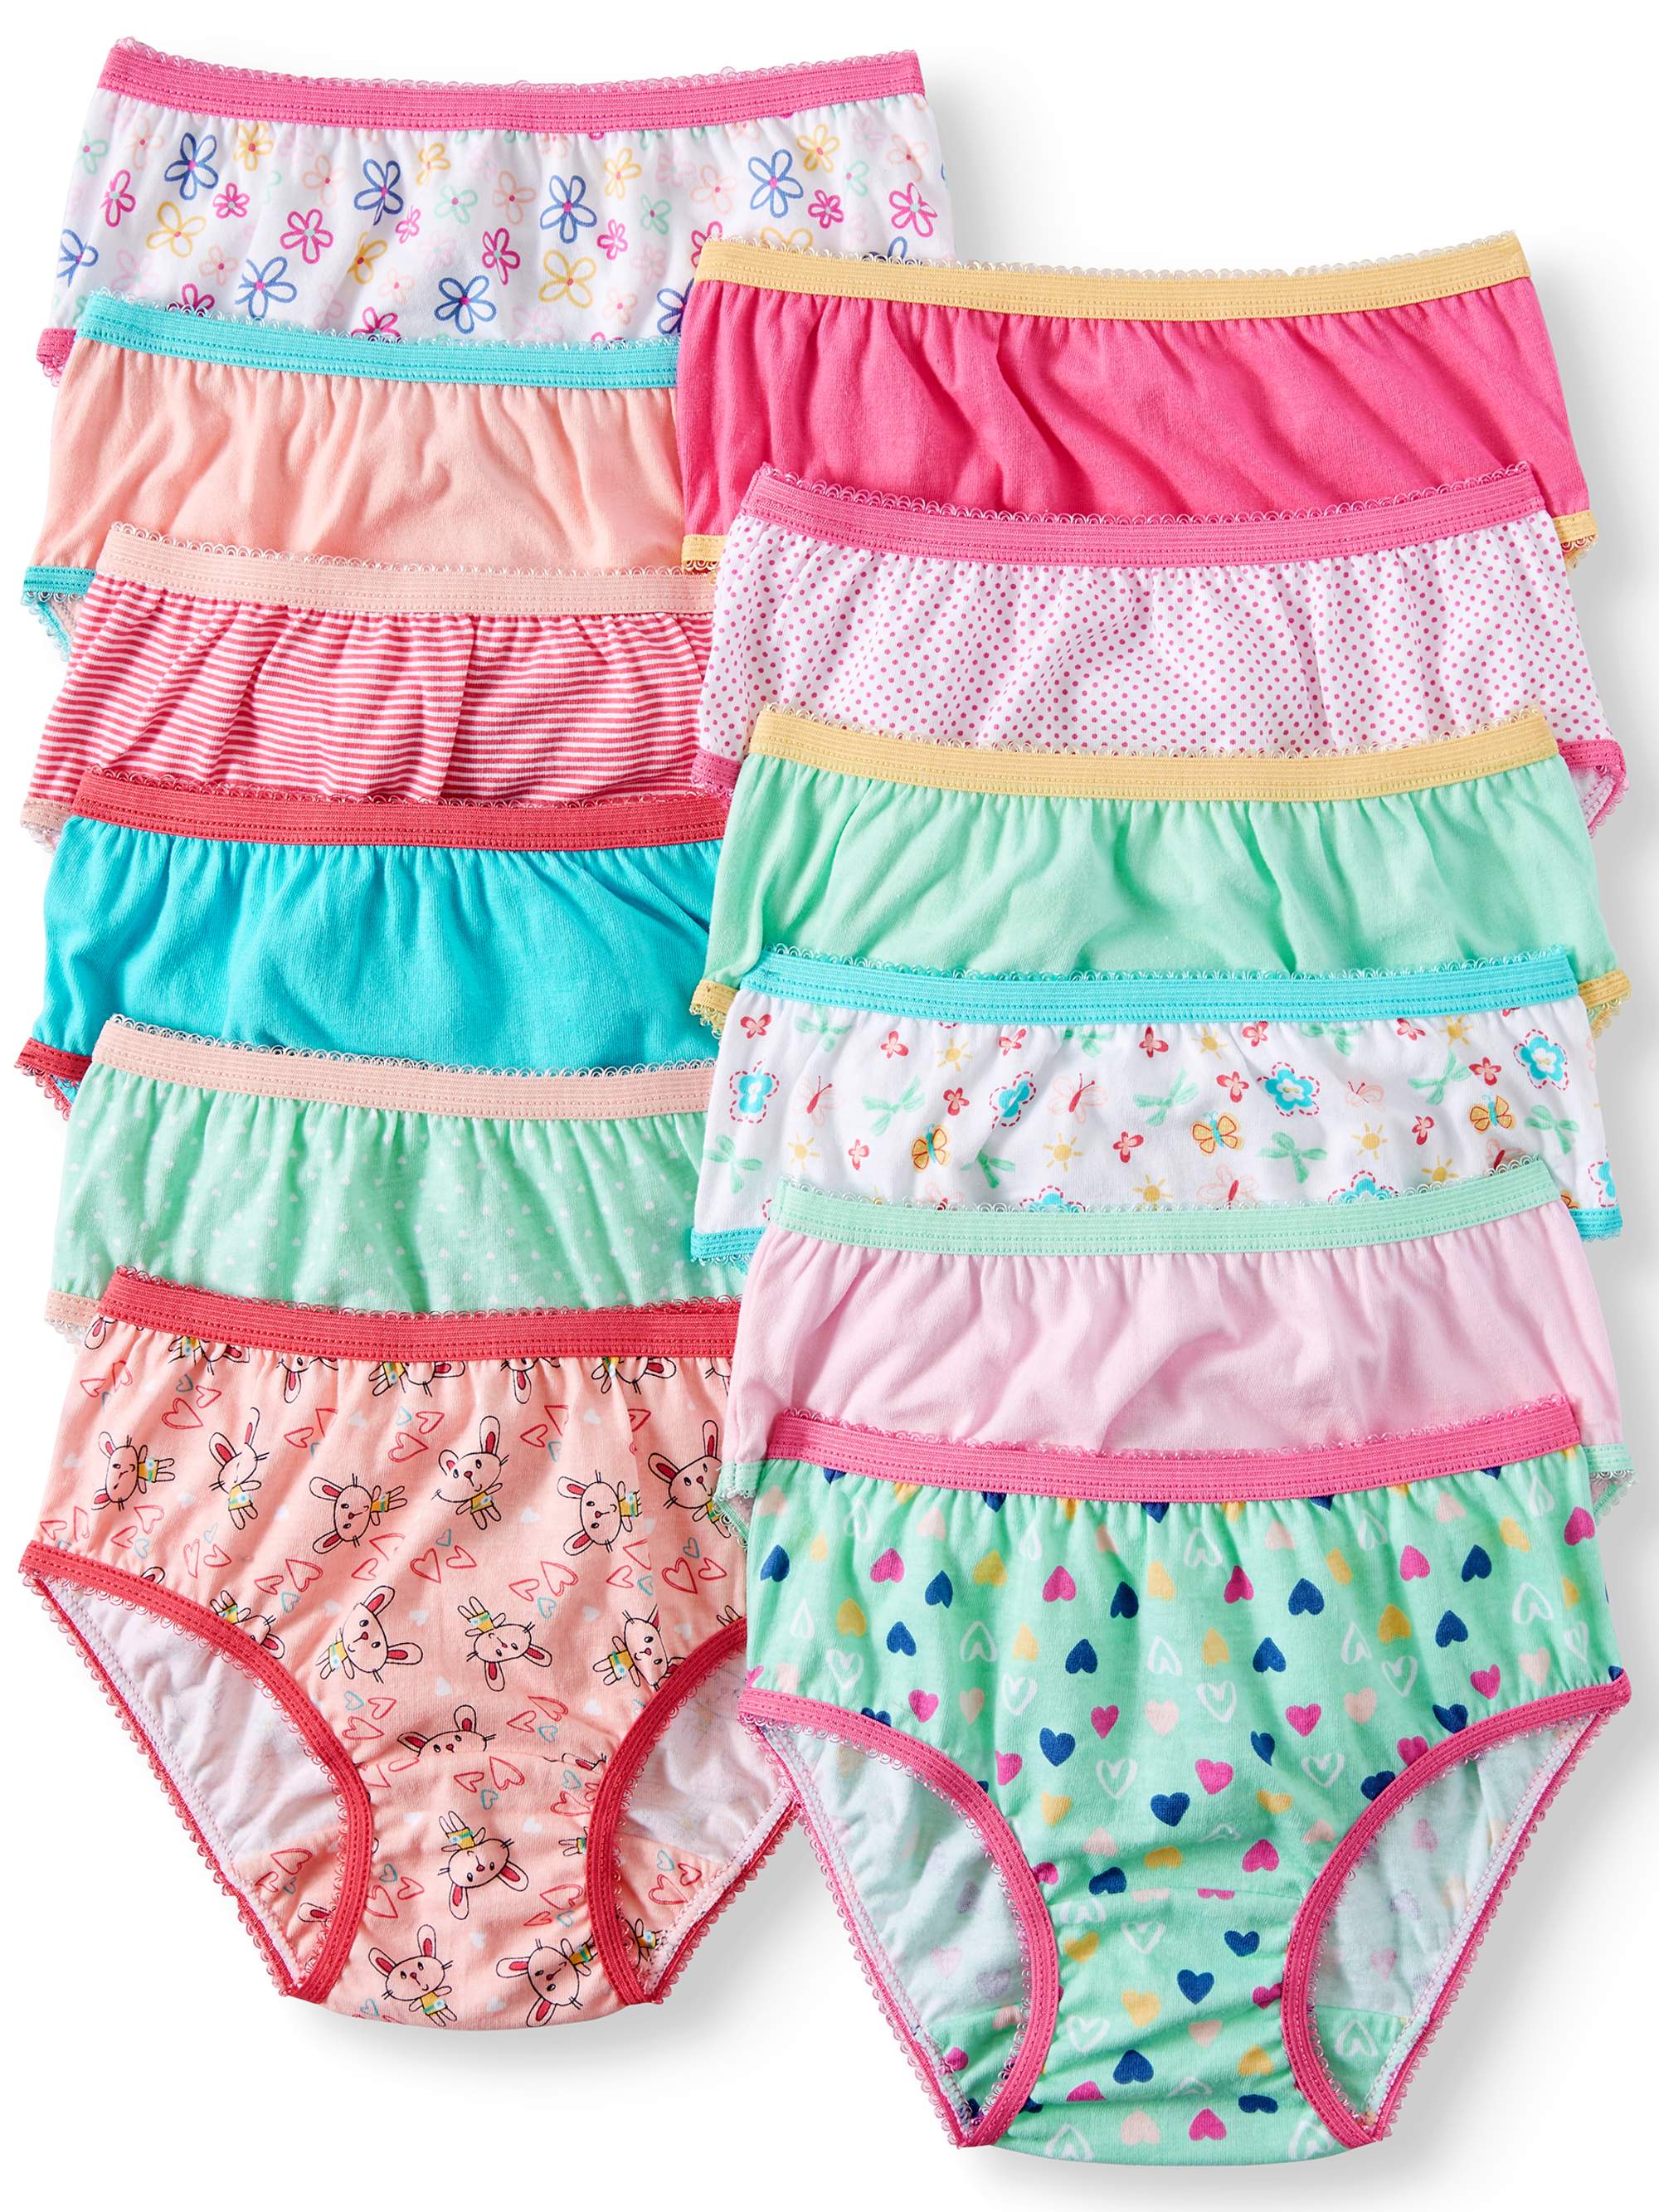 Wonder Nation Toddler Girls Underwear 100% Cotton, Super Comfortable Brief Panties, 12-pack - image 1 of 2